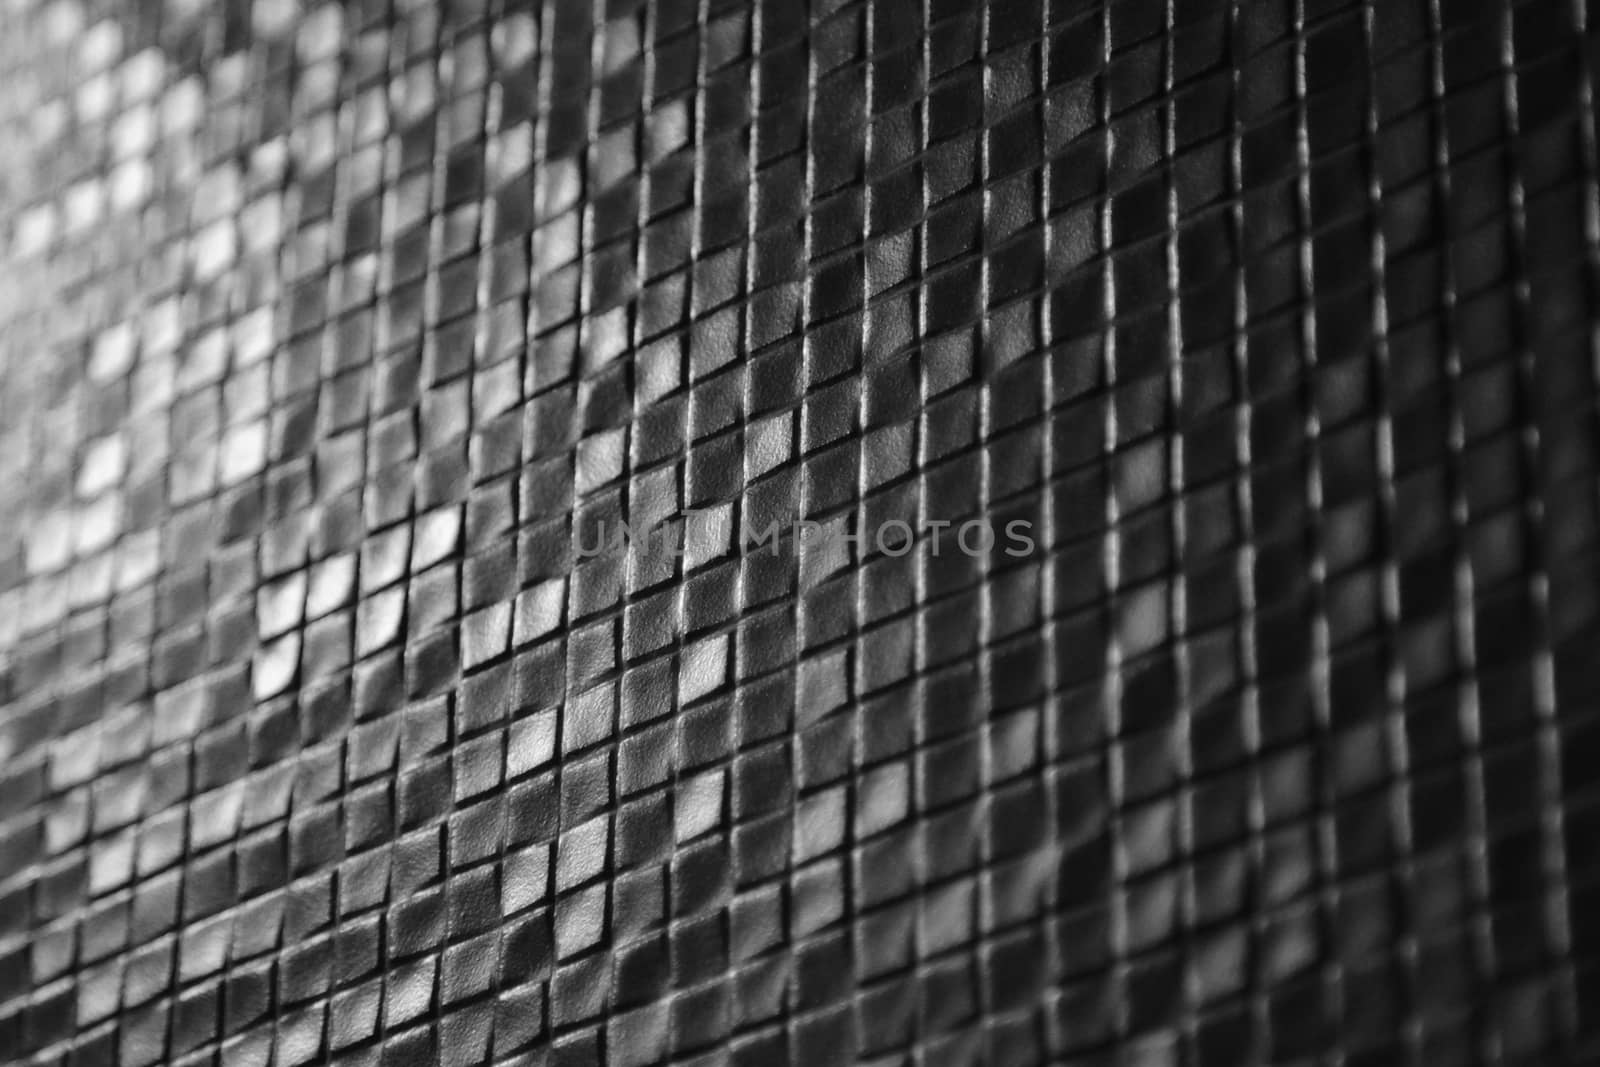 Dark tiles mosaic pattern on a wall